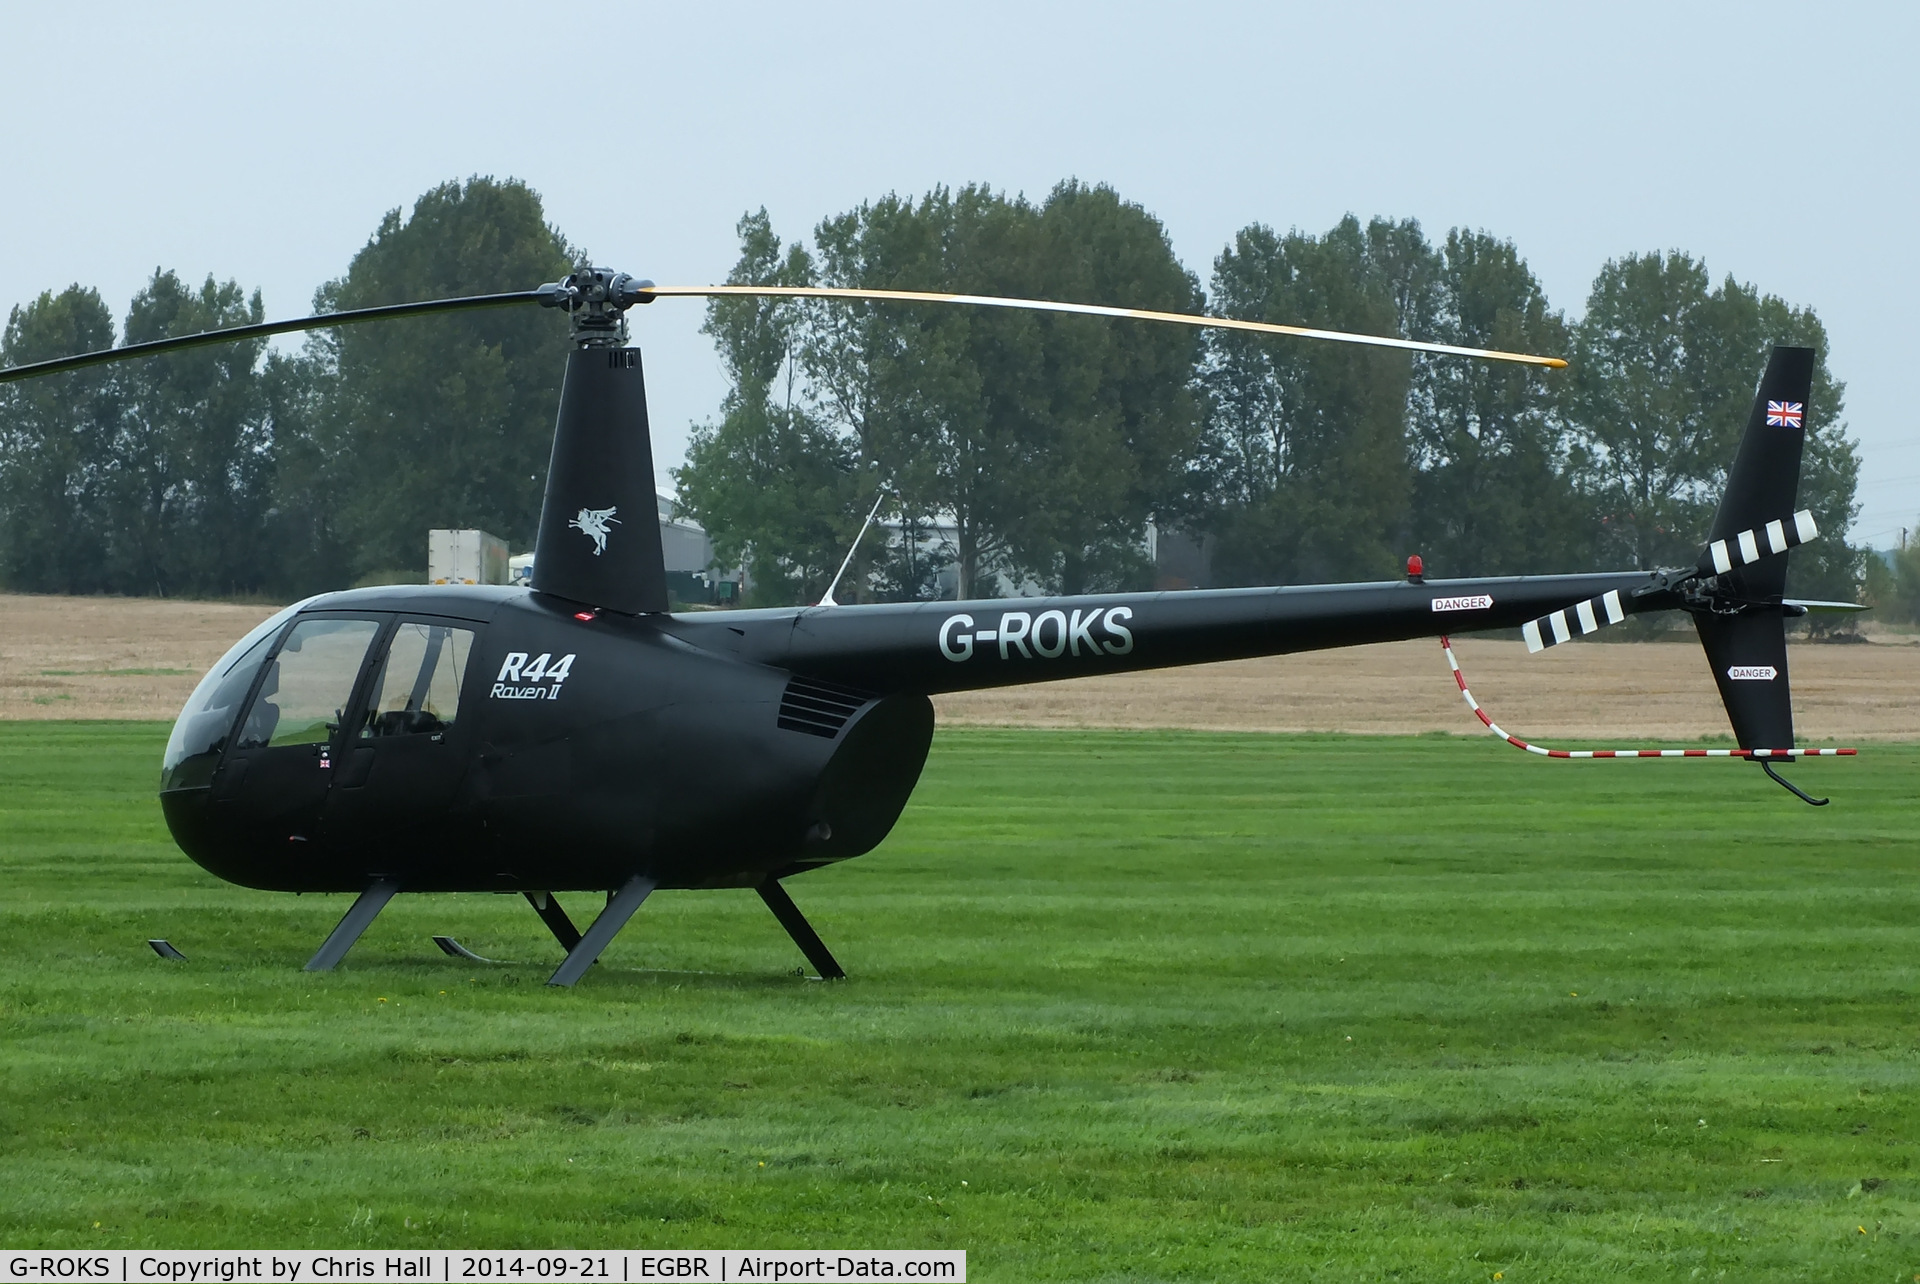 G-ROKS, 2004 Robinson R44 Raven II C/N 10325, at Breighton's Heli Fly-in, 2014